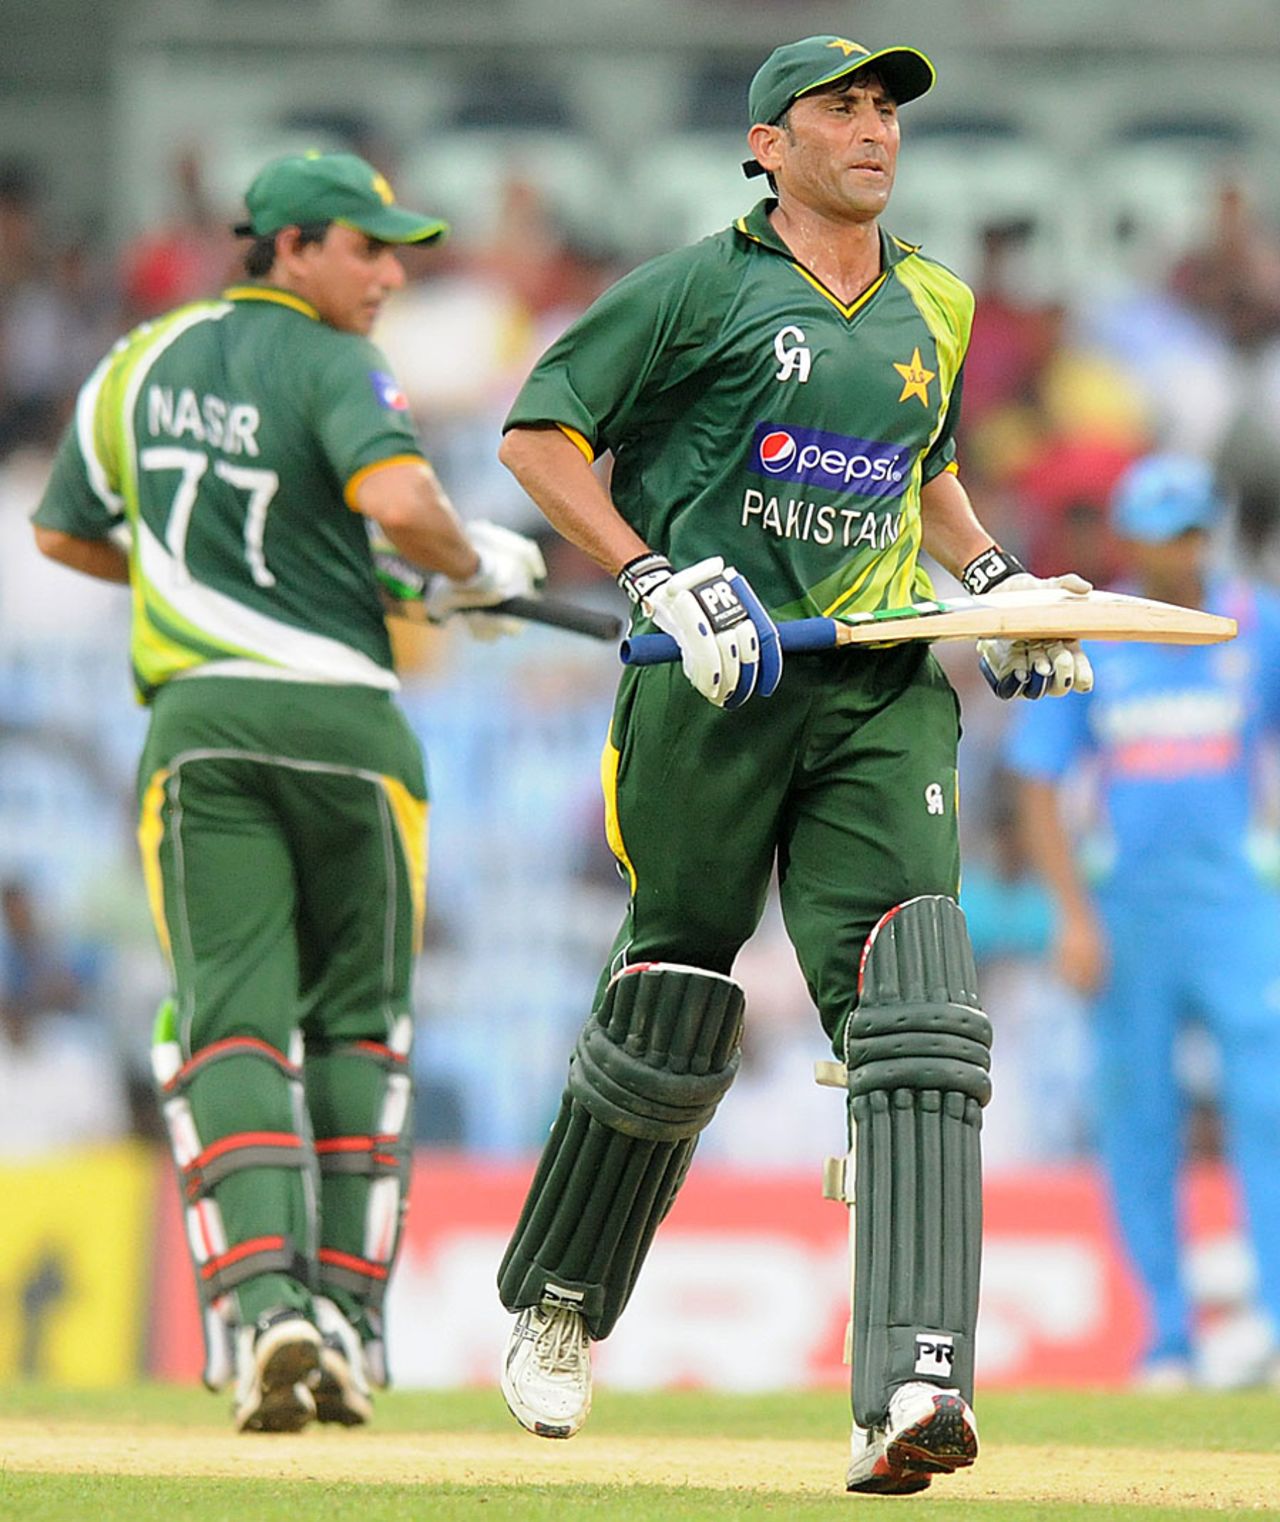 Younis Khan and Nasir Jamshed steadied Pakistan's chase, India v Pakistan, 1st ODI, Chennai, December 30, 2012